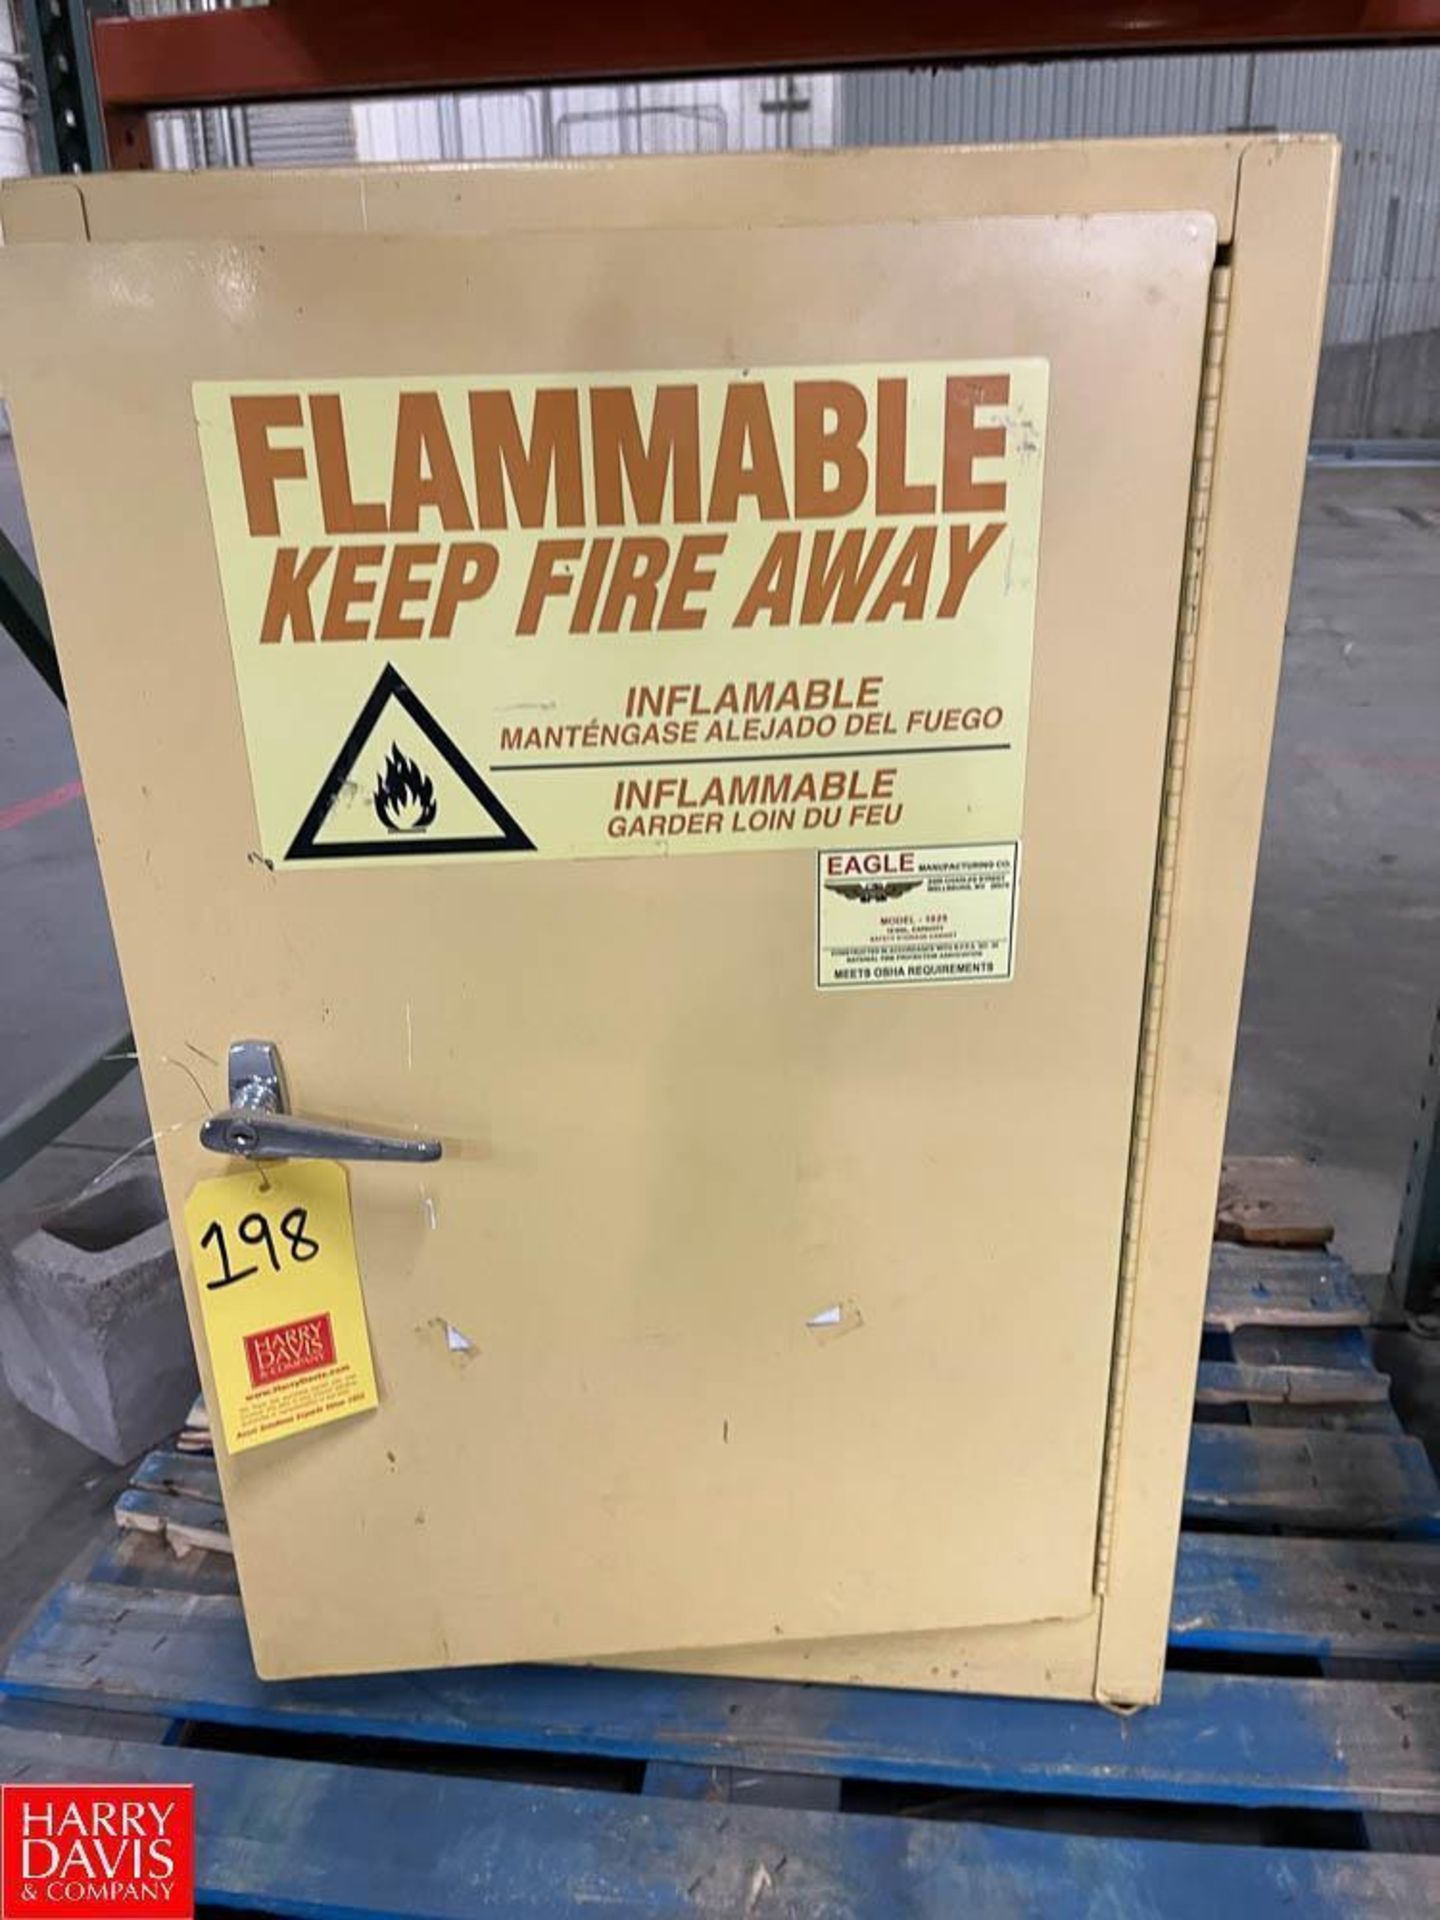 Eagle 12 Gallon Flammable Storage Cabinet